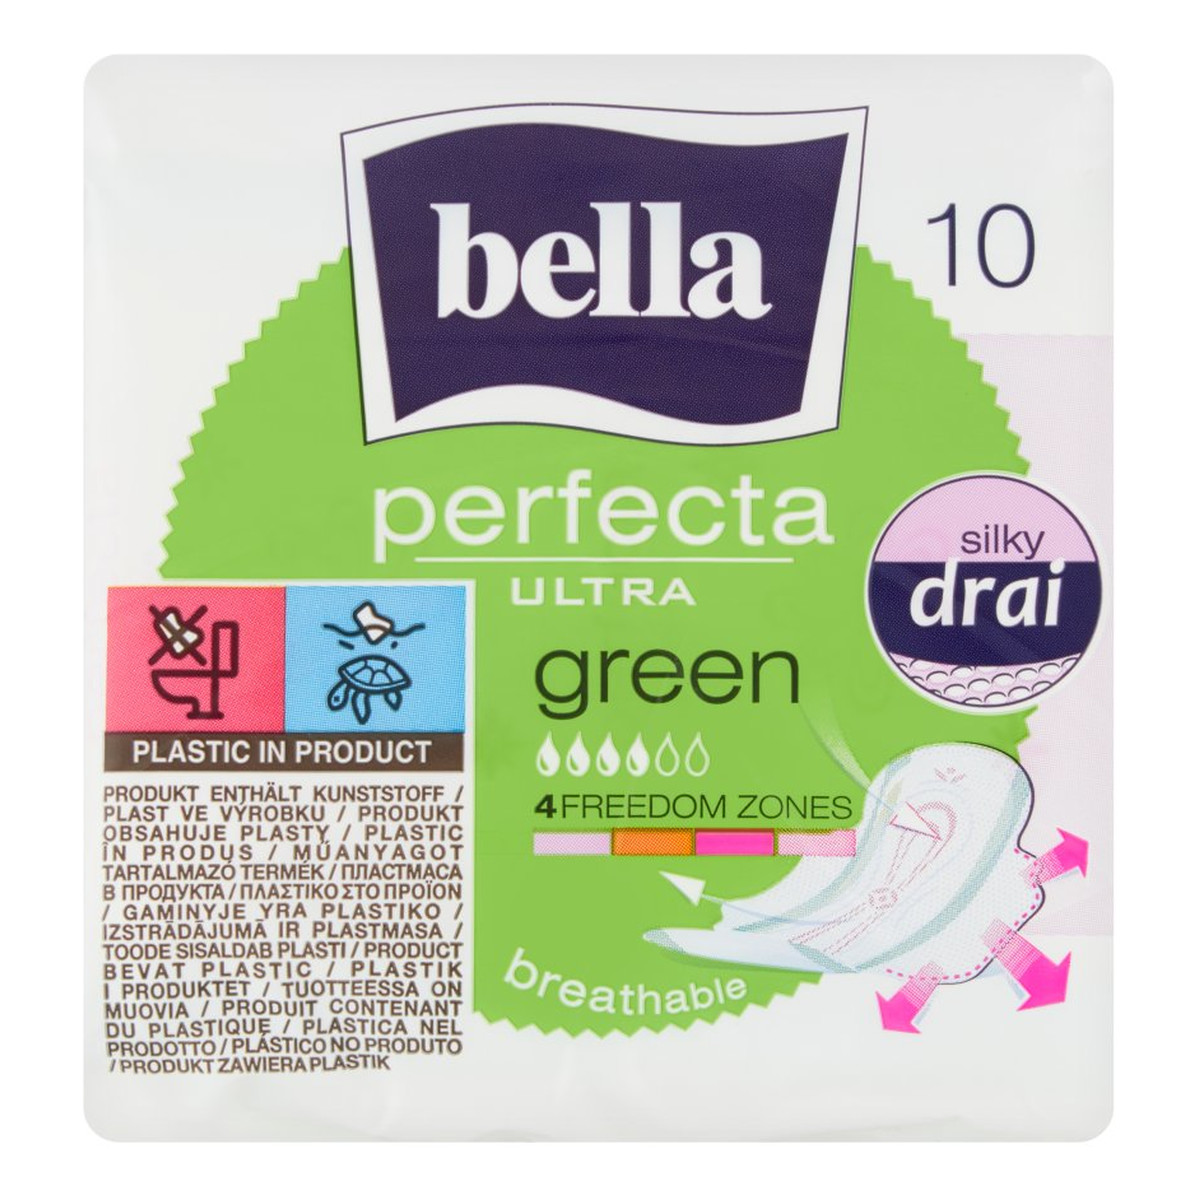 Bella Ultra Green Perfecta Podpaski Higieniczne 10 Sztuk